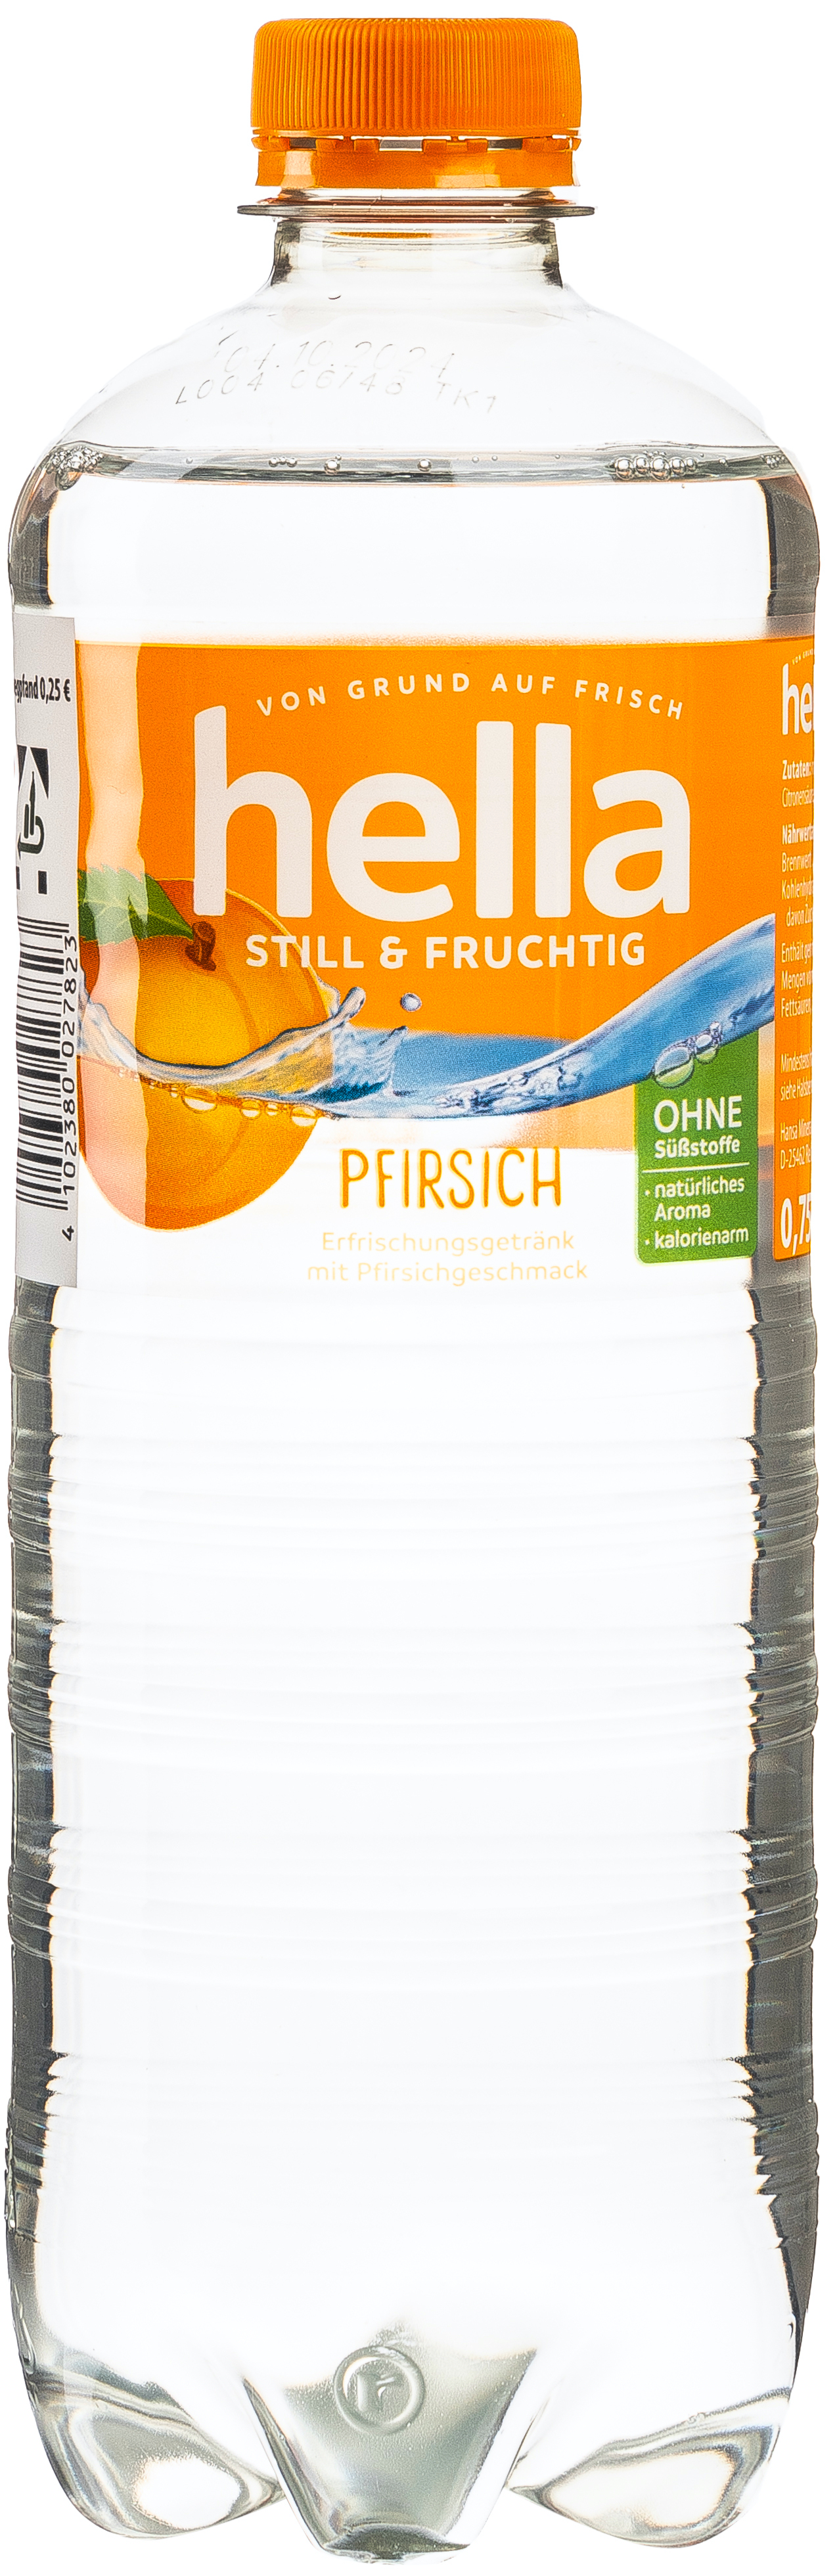 hella Pfirsich 0,75L EINWEG